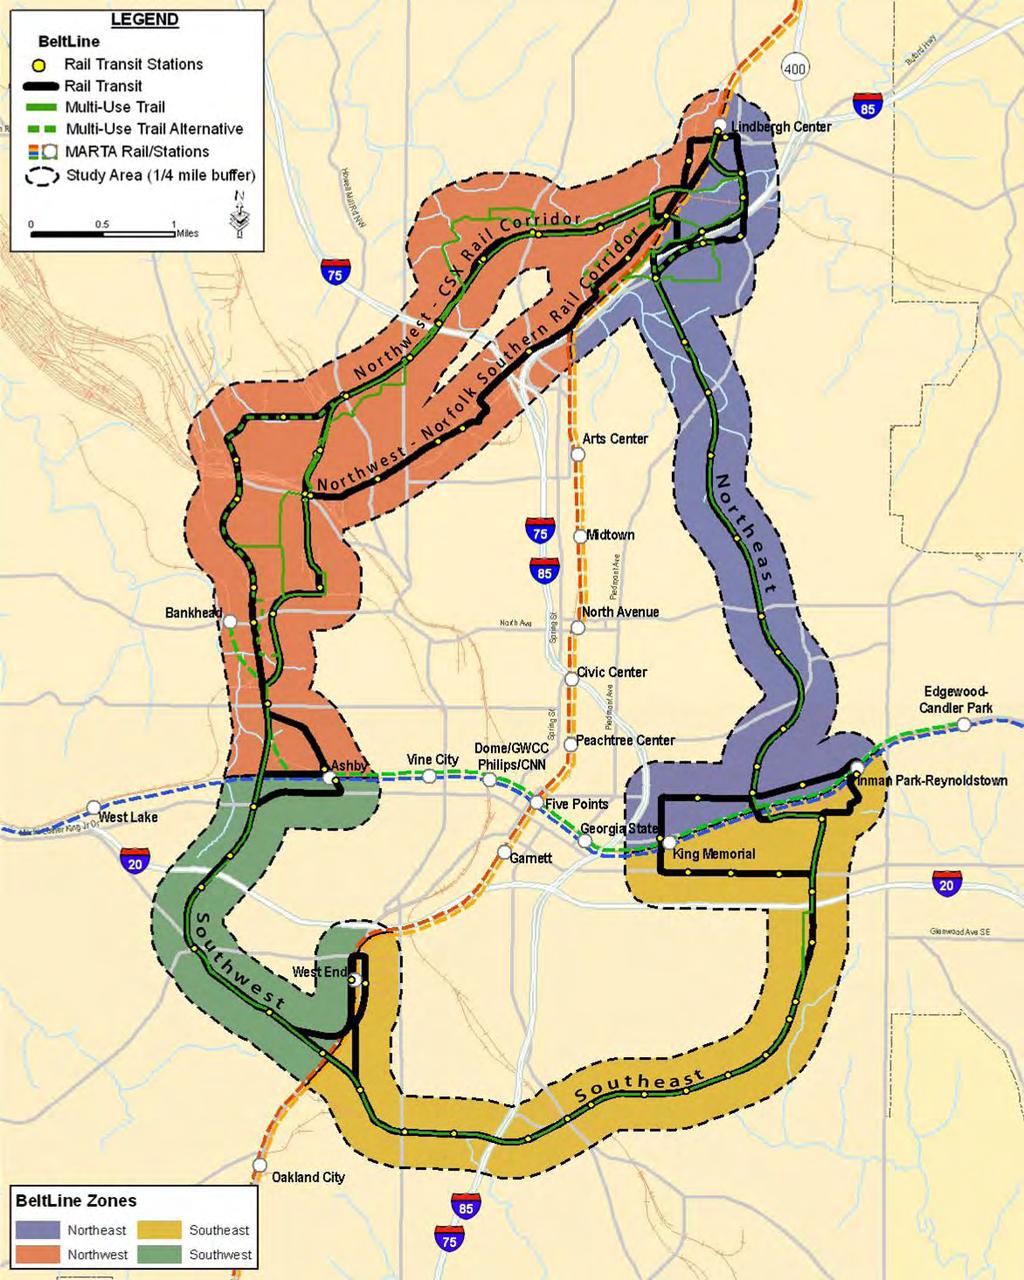 Figure 1-1: Atlanta BeltLine Study Area and Zones Source: AECOM/JJG